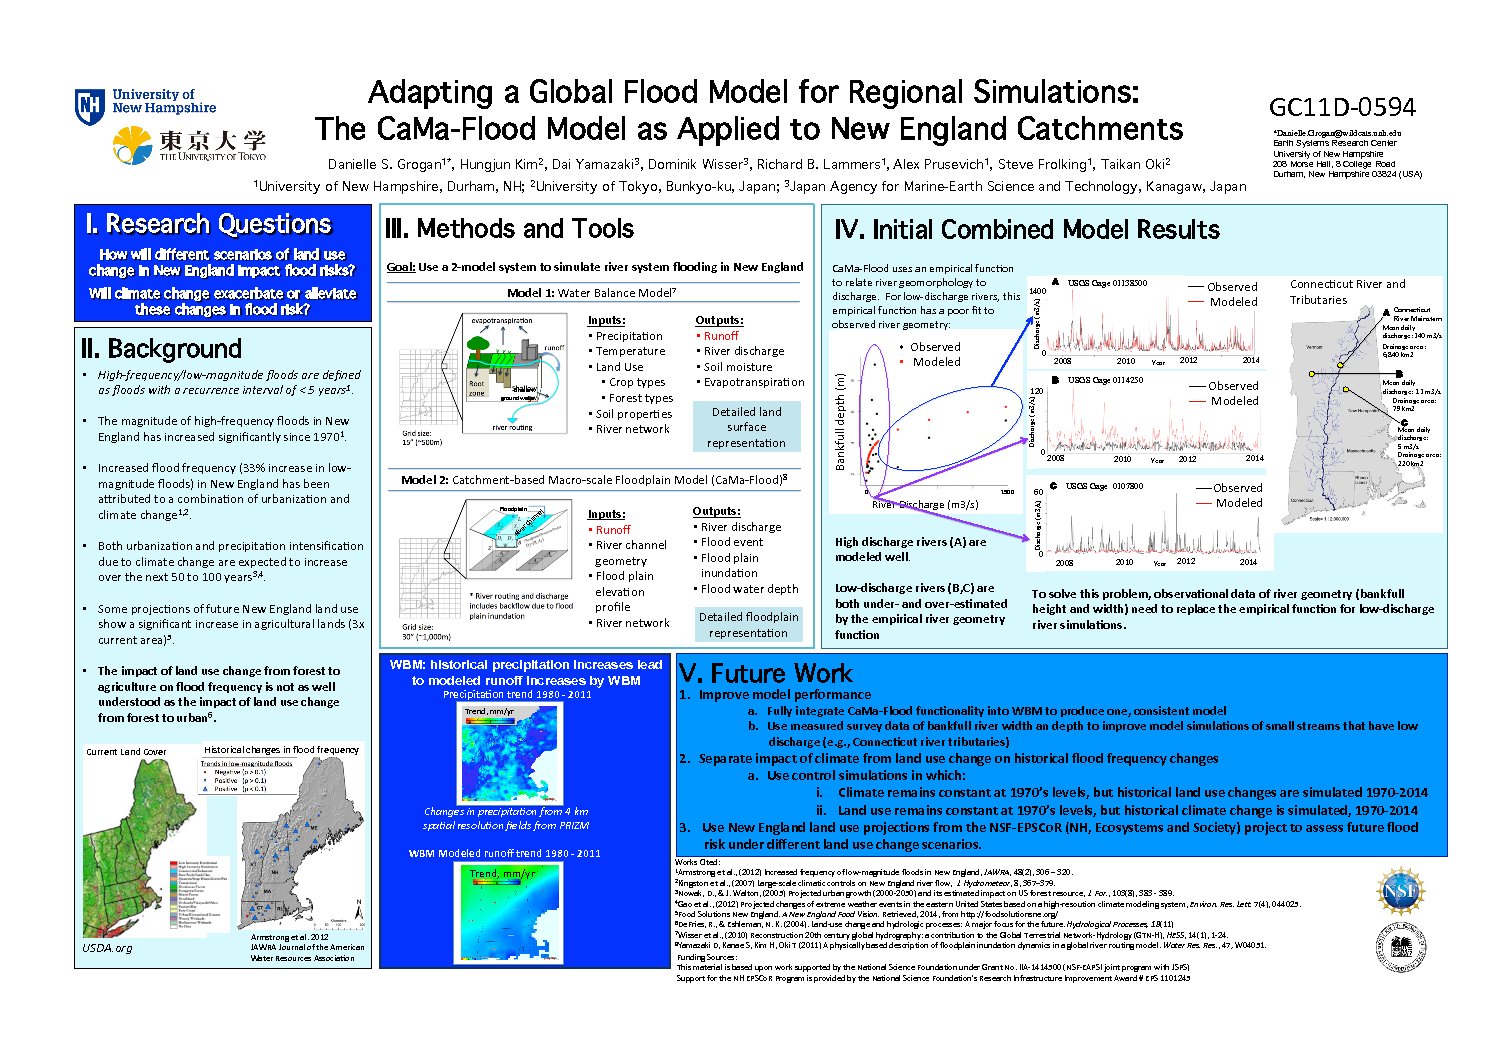 Adapting A Global Flood Model For Regional Simulations by dgrogan